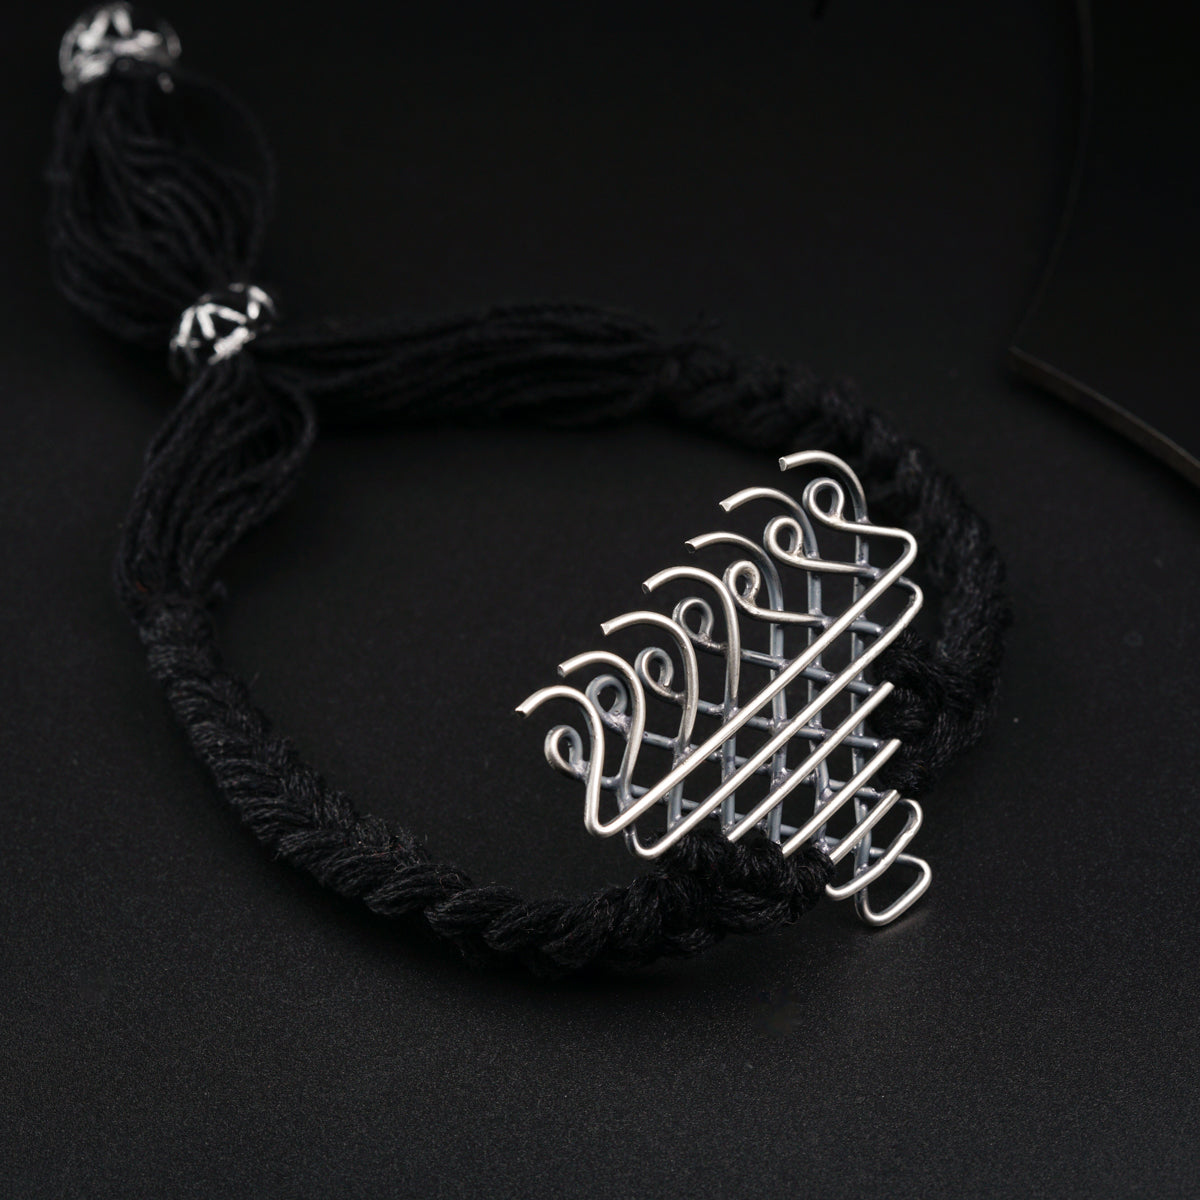 a black string bracelet with a silver pendant